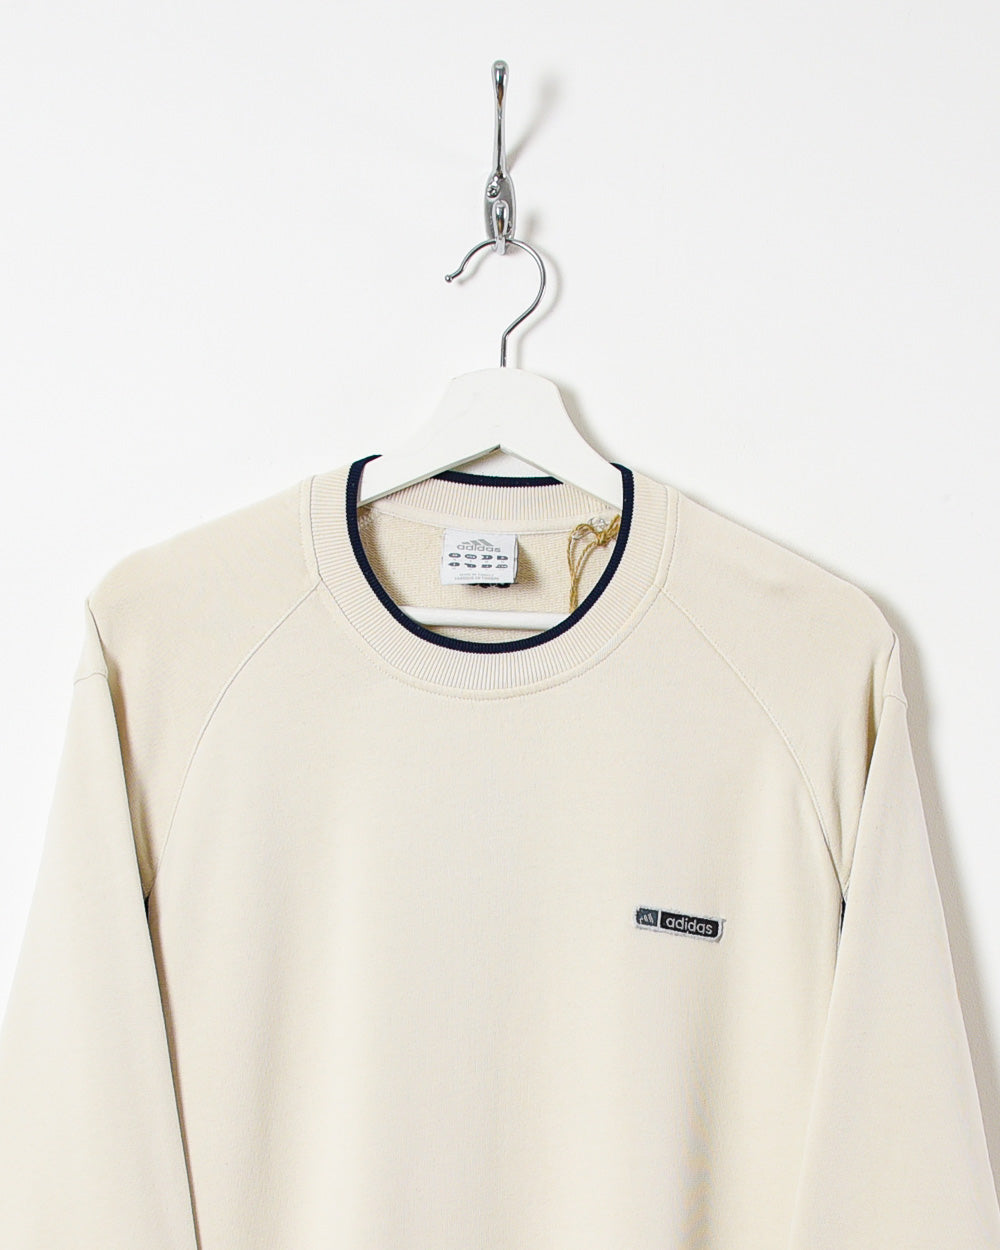 Neutral Adidas Sweatshirt - Medium